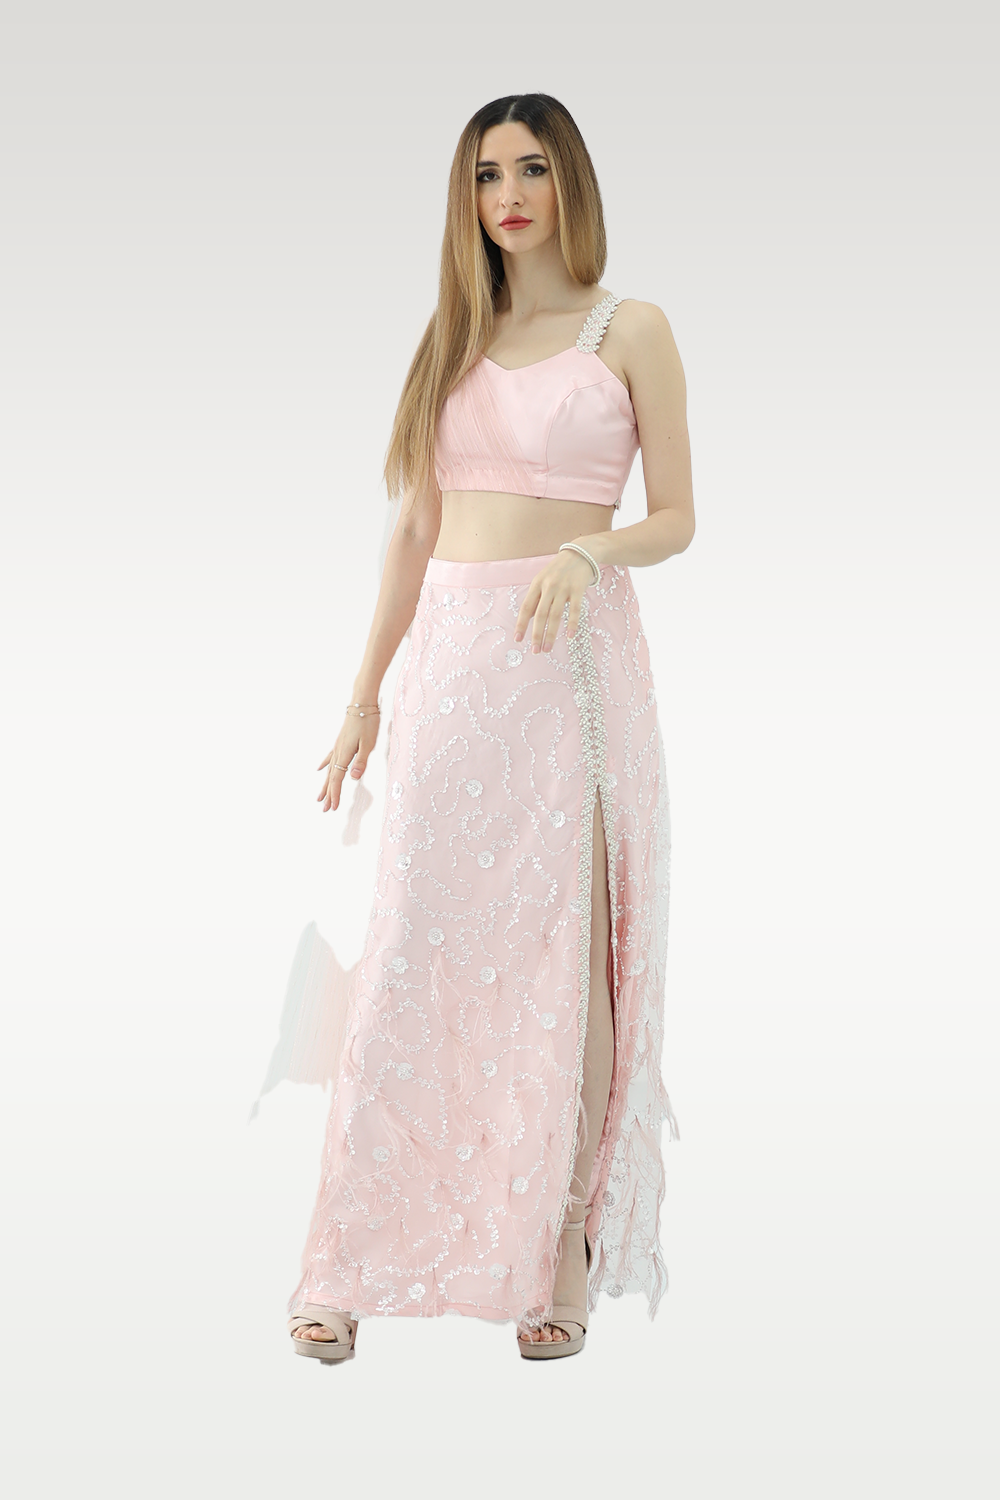 Alish Light Pink Designer Top and Lehenga